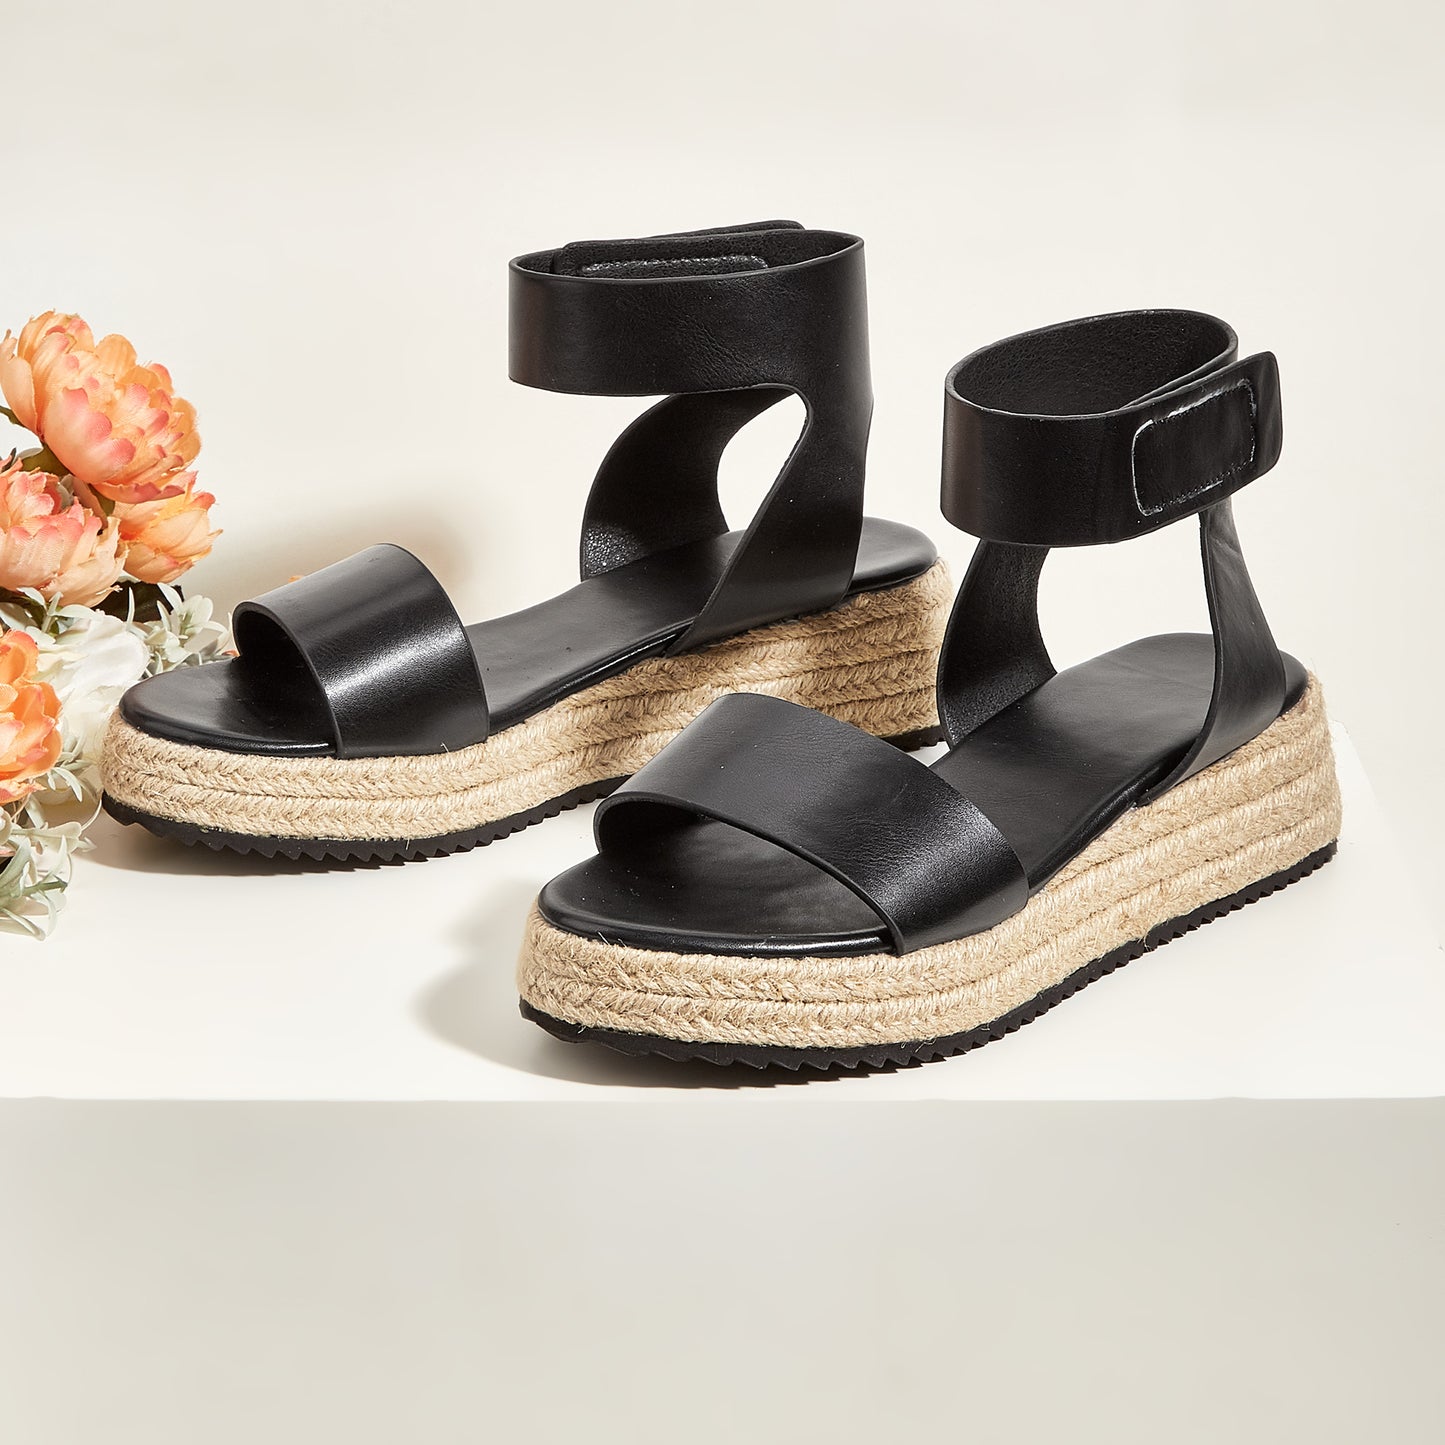 Women's Open Toe Espadrilles Platform Wedge Sandals Ankle Strap Low Heels Hemp Rope Beach Shoes